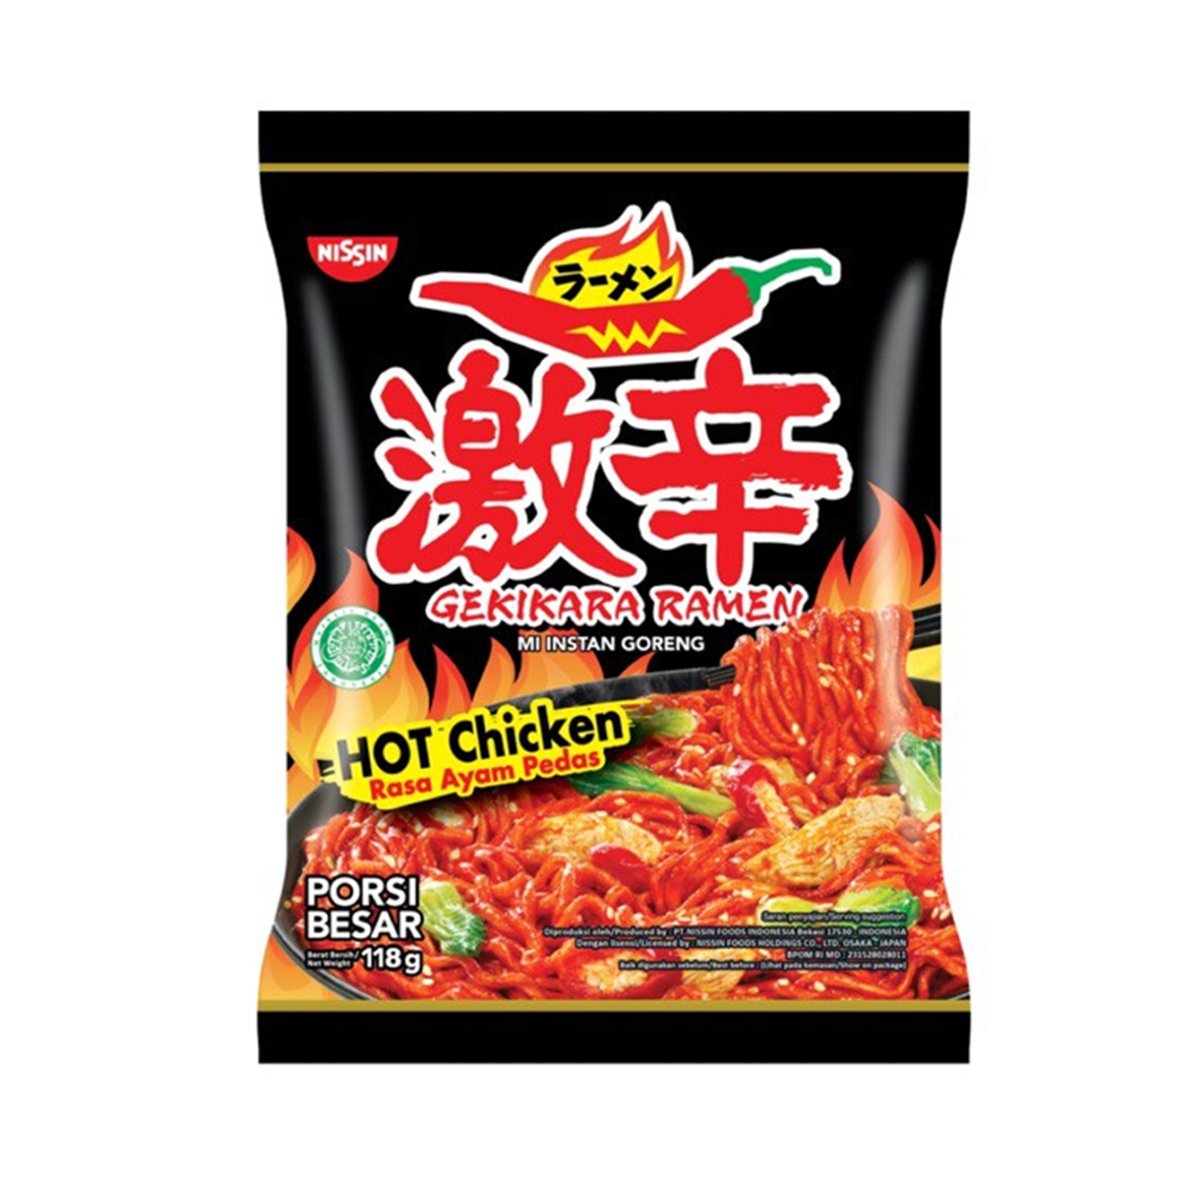 Nissin Gekikara Ramen Hot Chicken 118 g